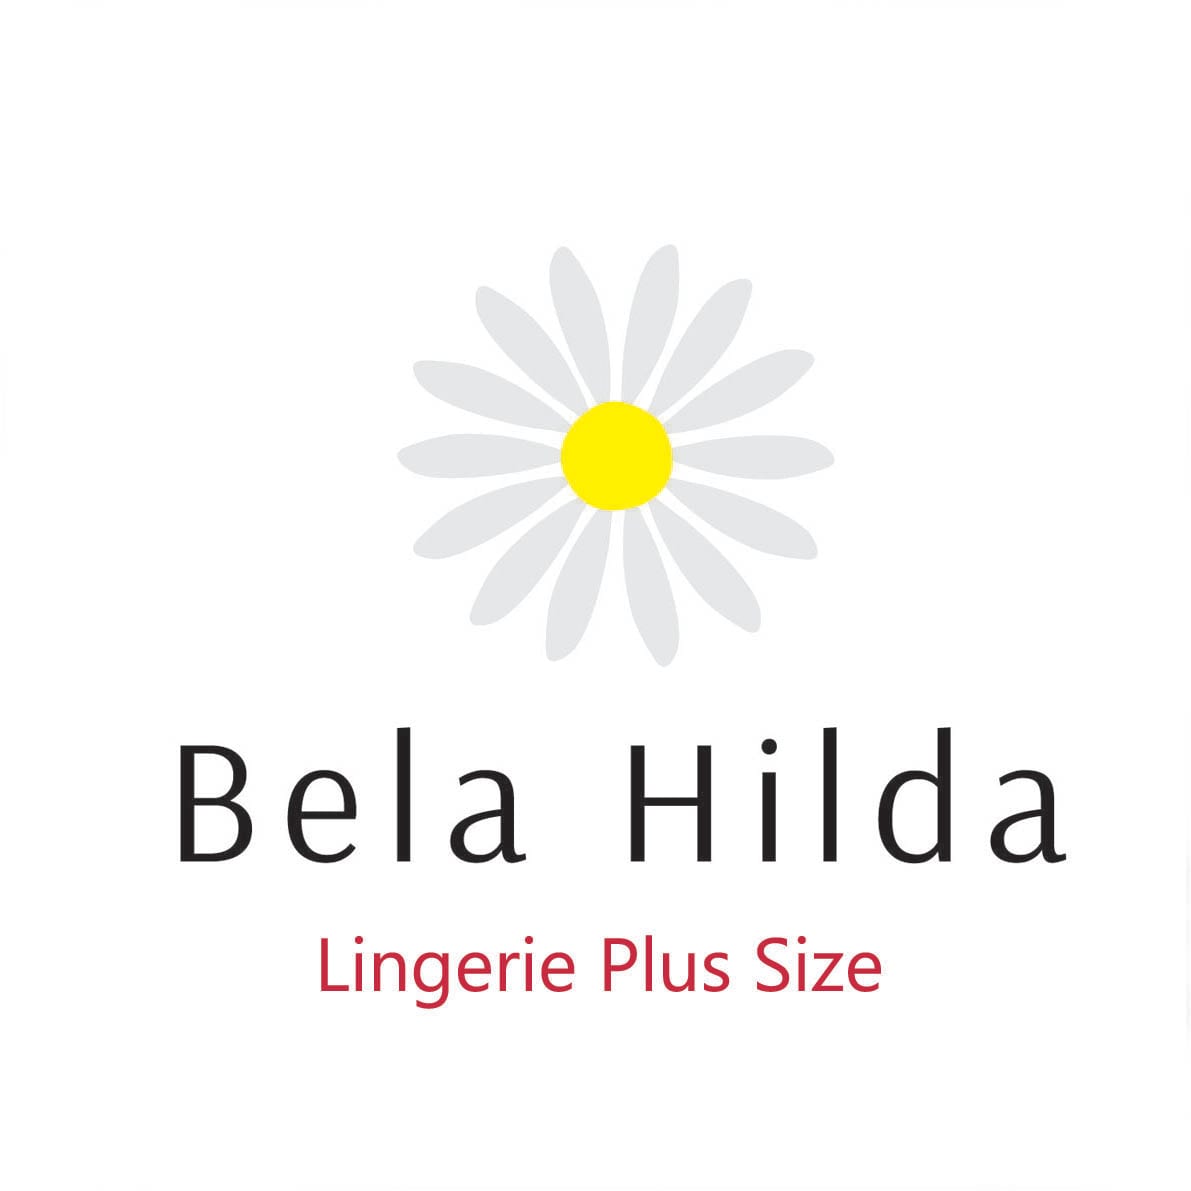 Bela Hilda Lingerie Plus Size